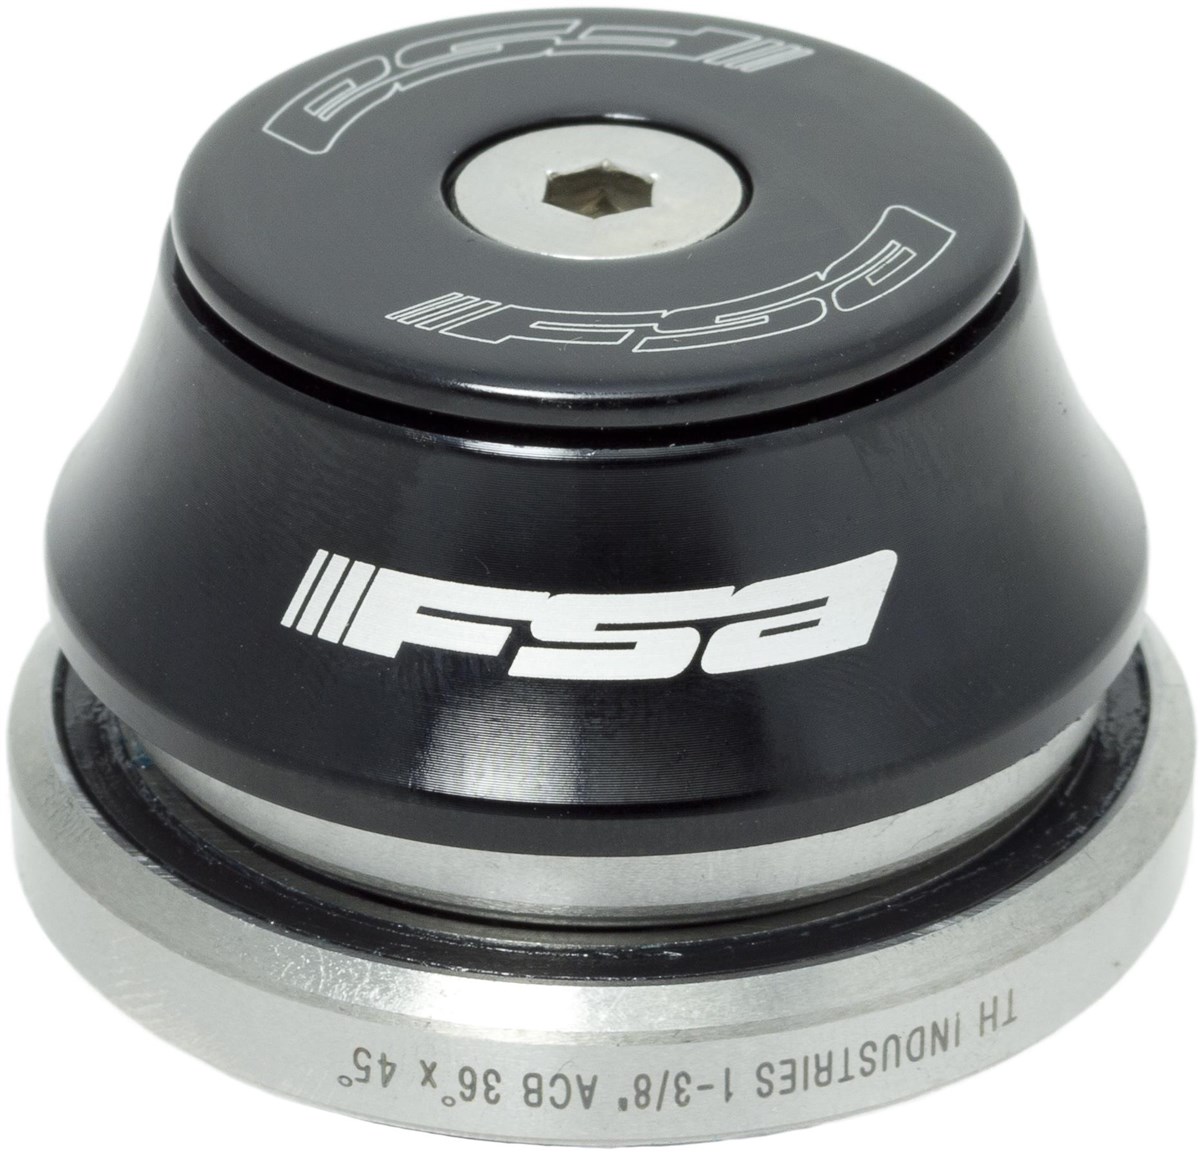 FSA Orbit IS 139 Headset product image